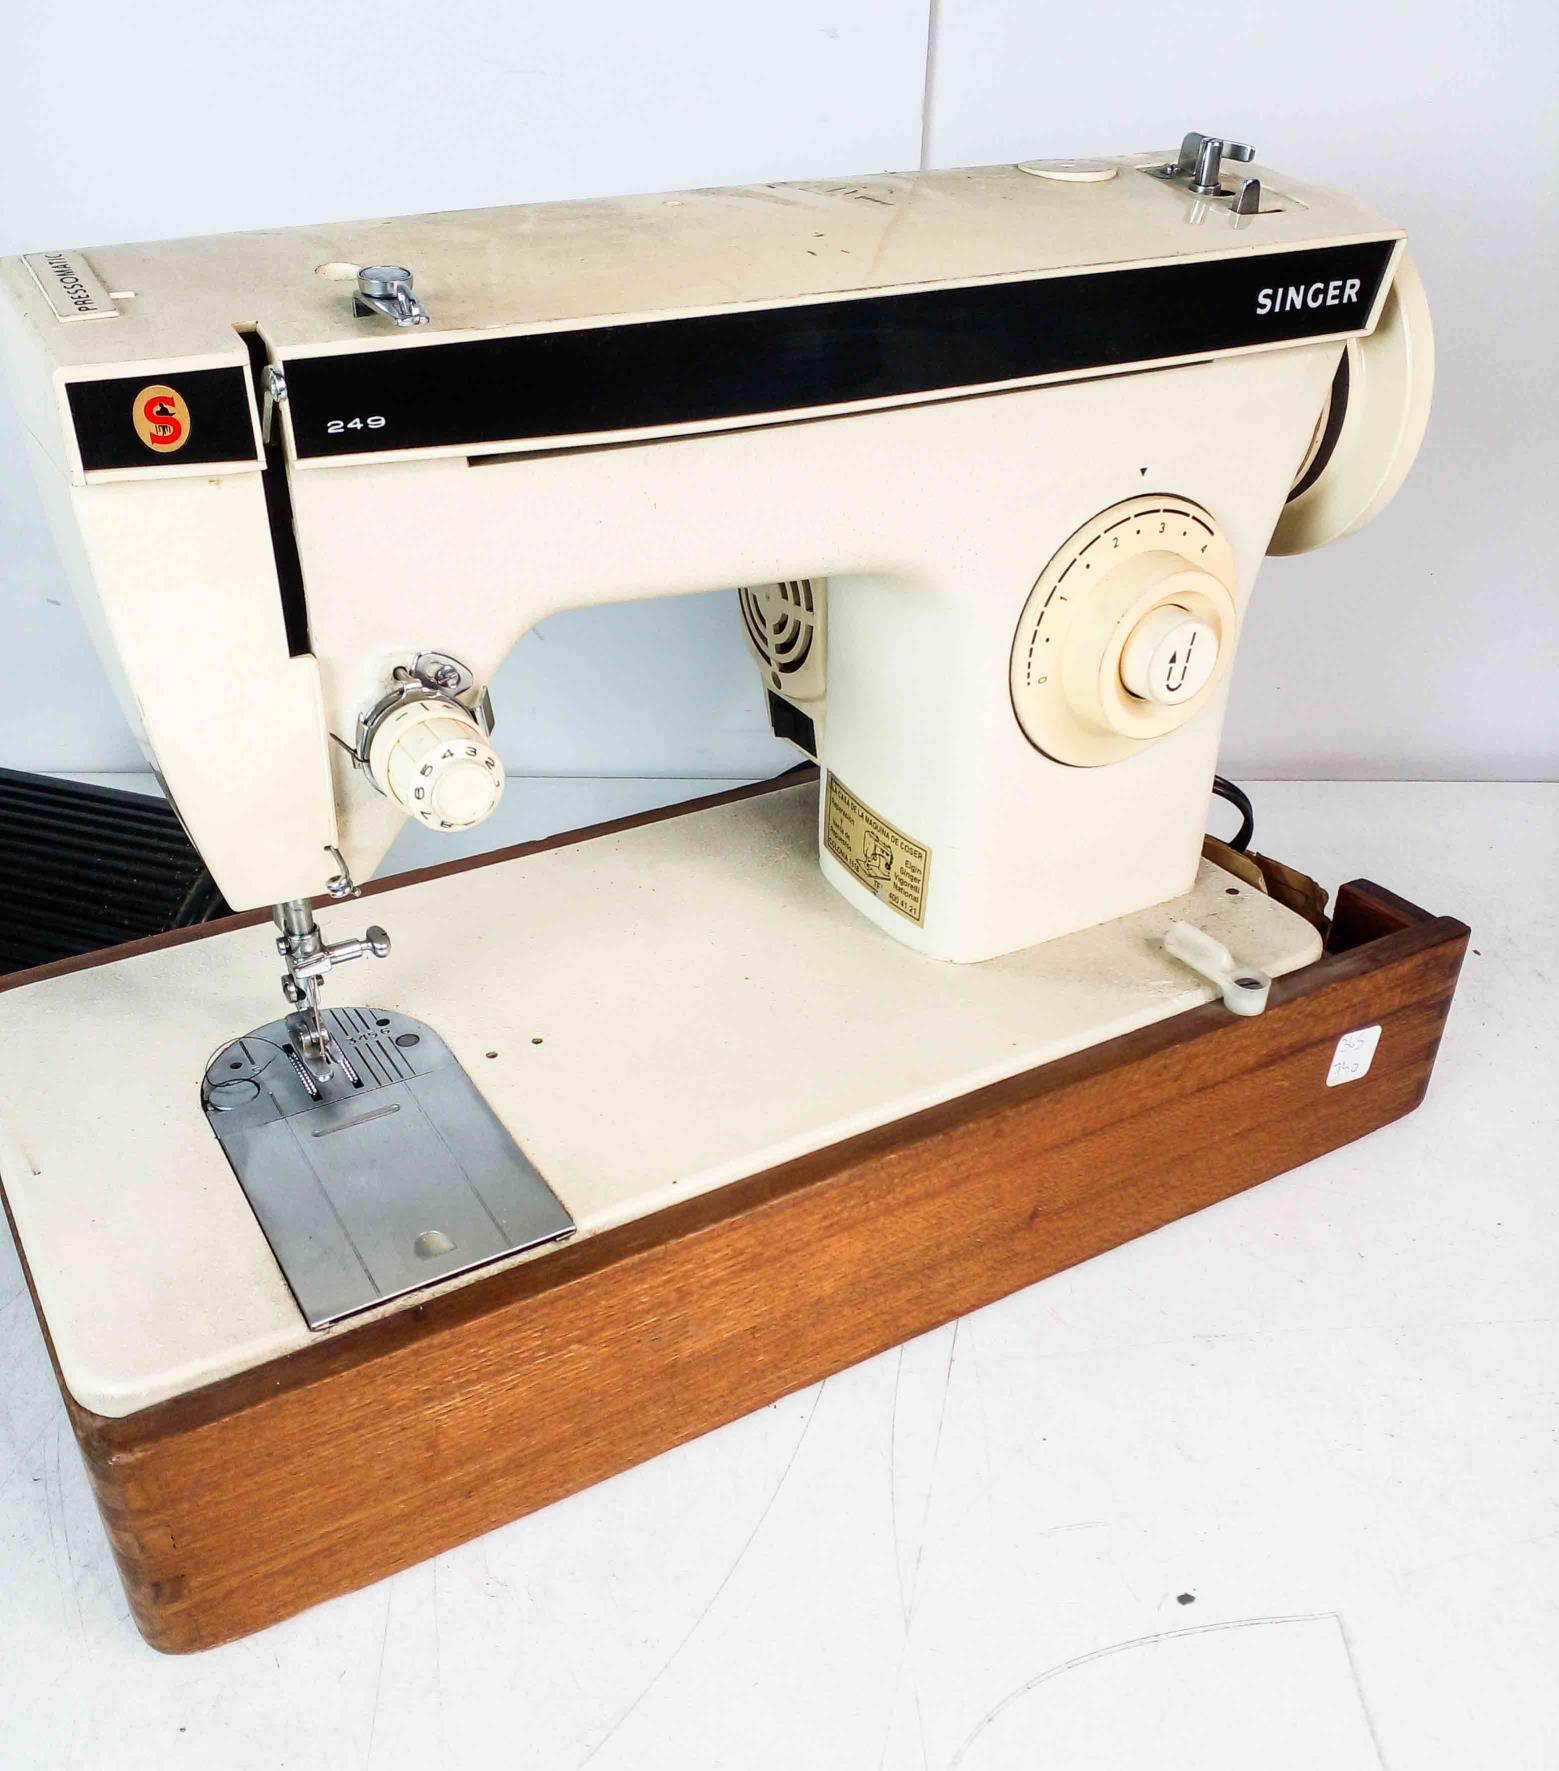 Maquina de coser SINGER modelo 249. Con funda. Prende, gira. No se probo su  funcionamiento.